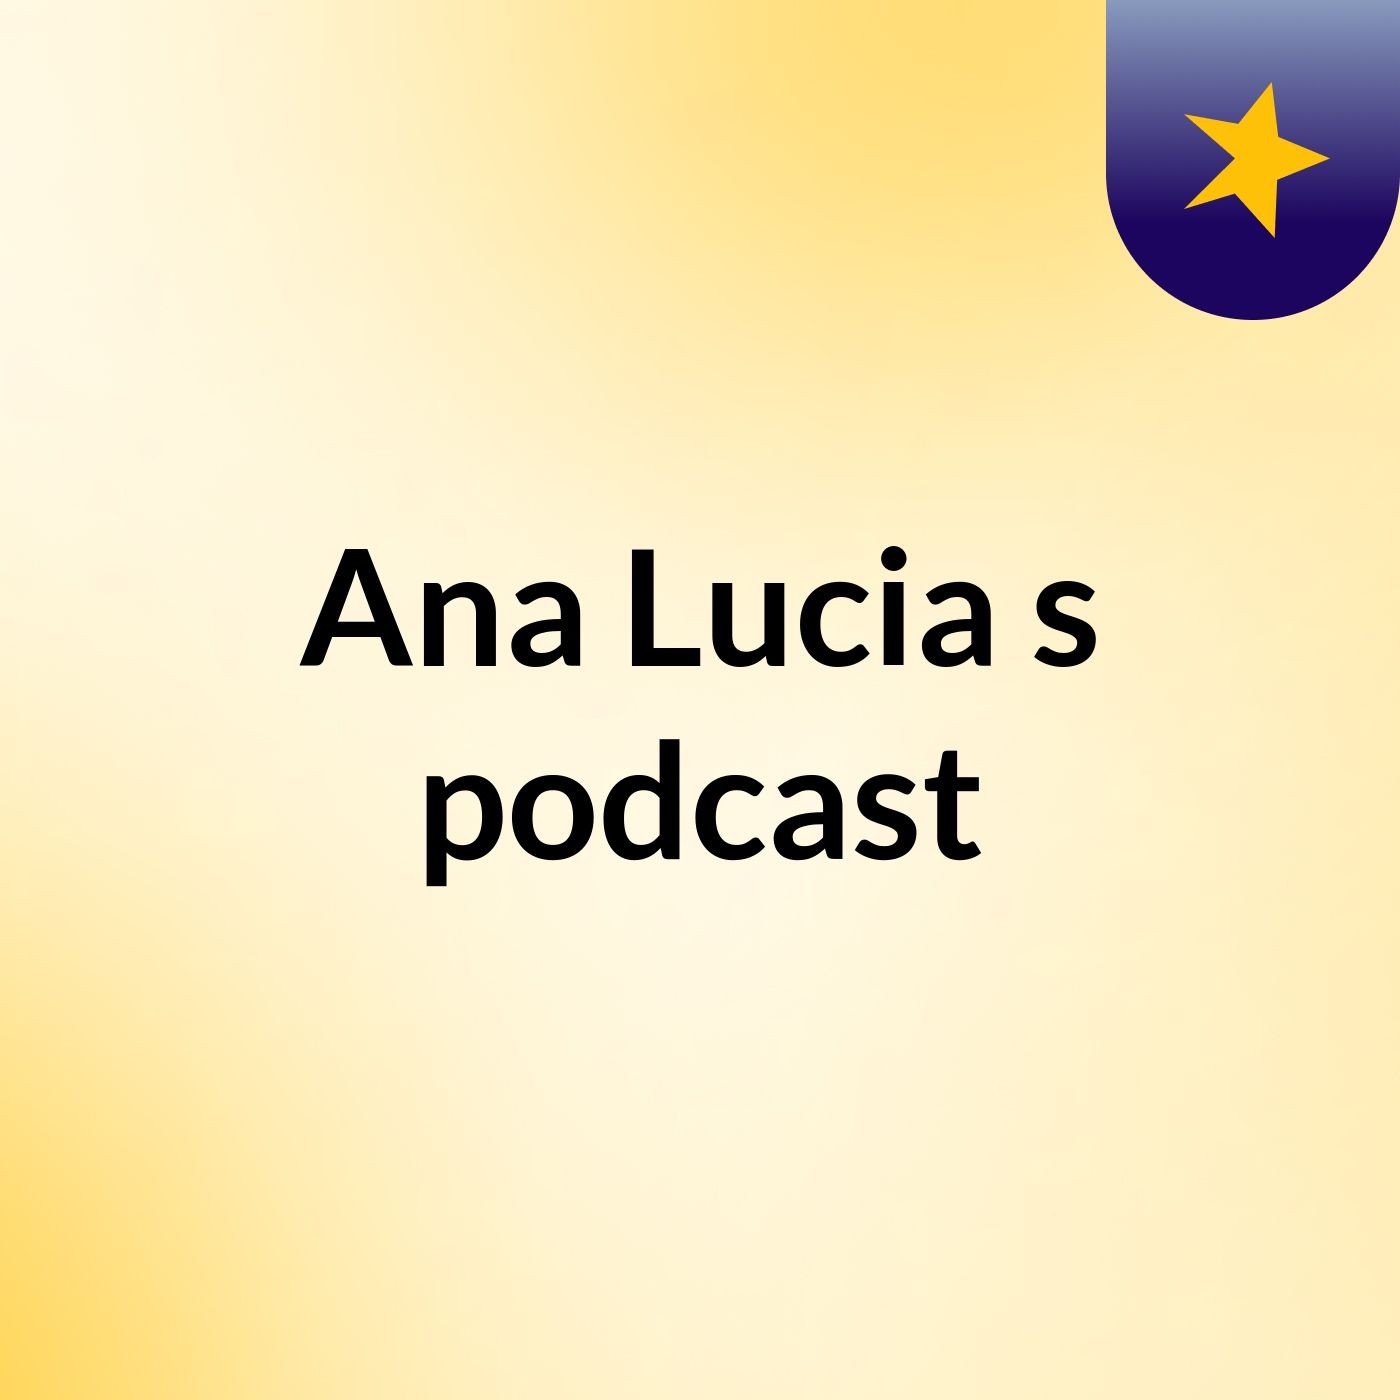 Ana Lucia's podcast